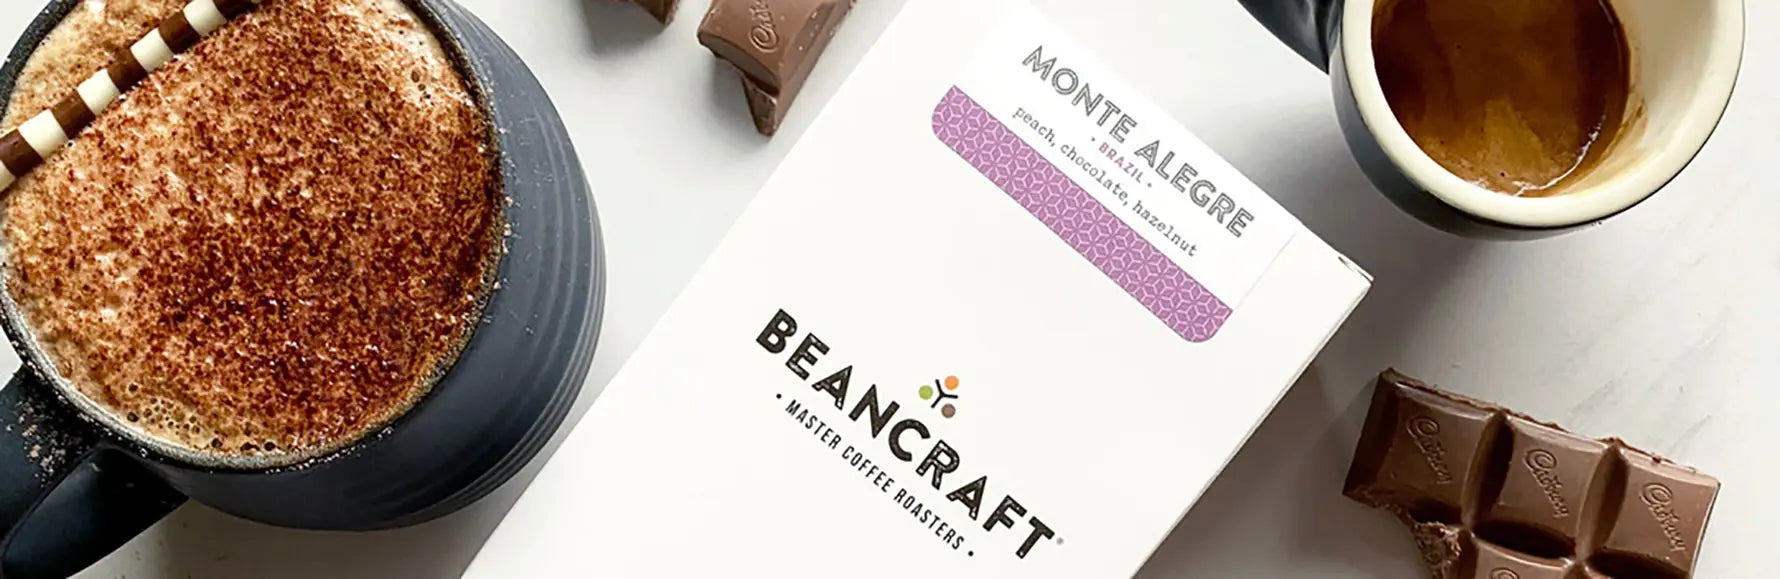 Blog Beancraft